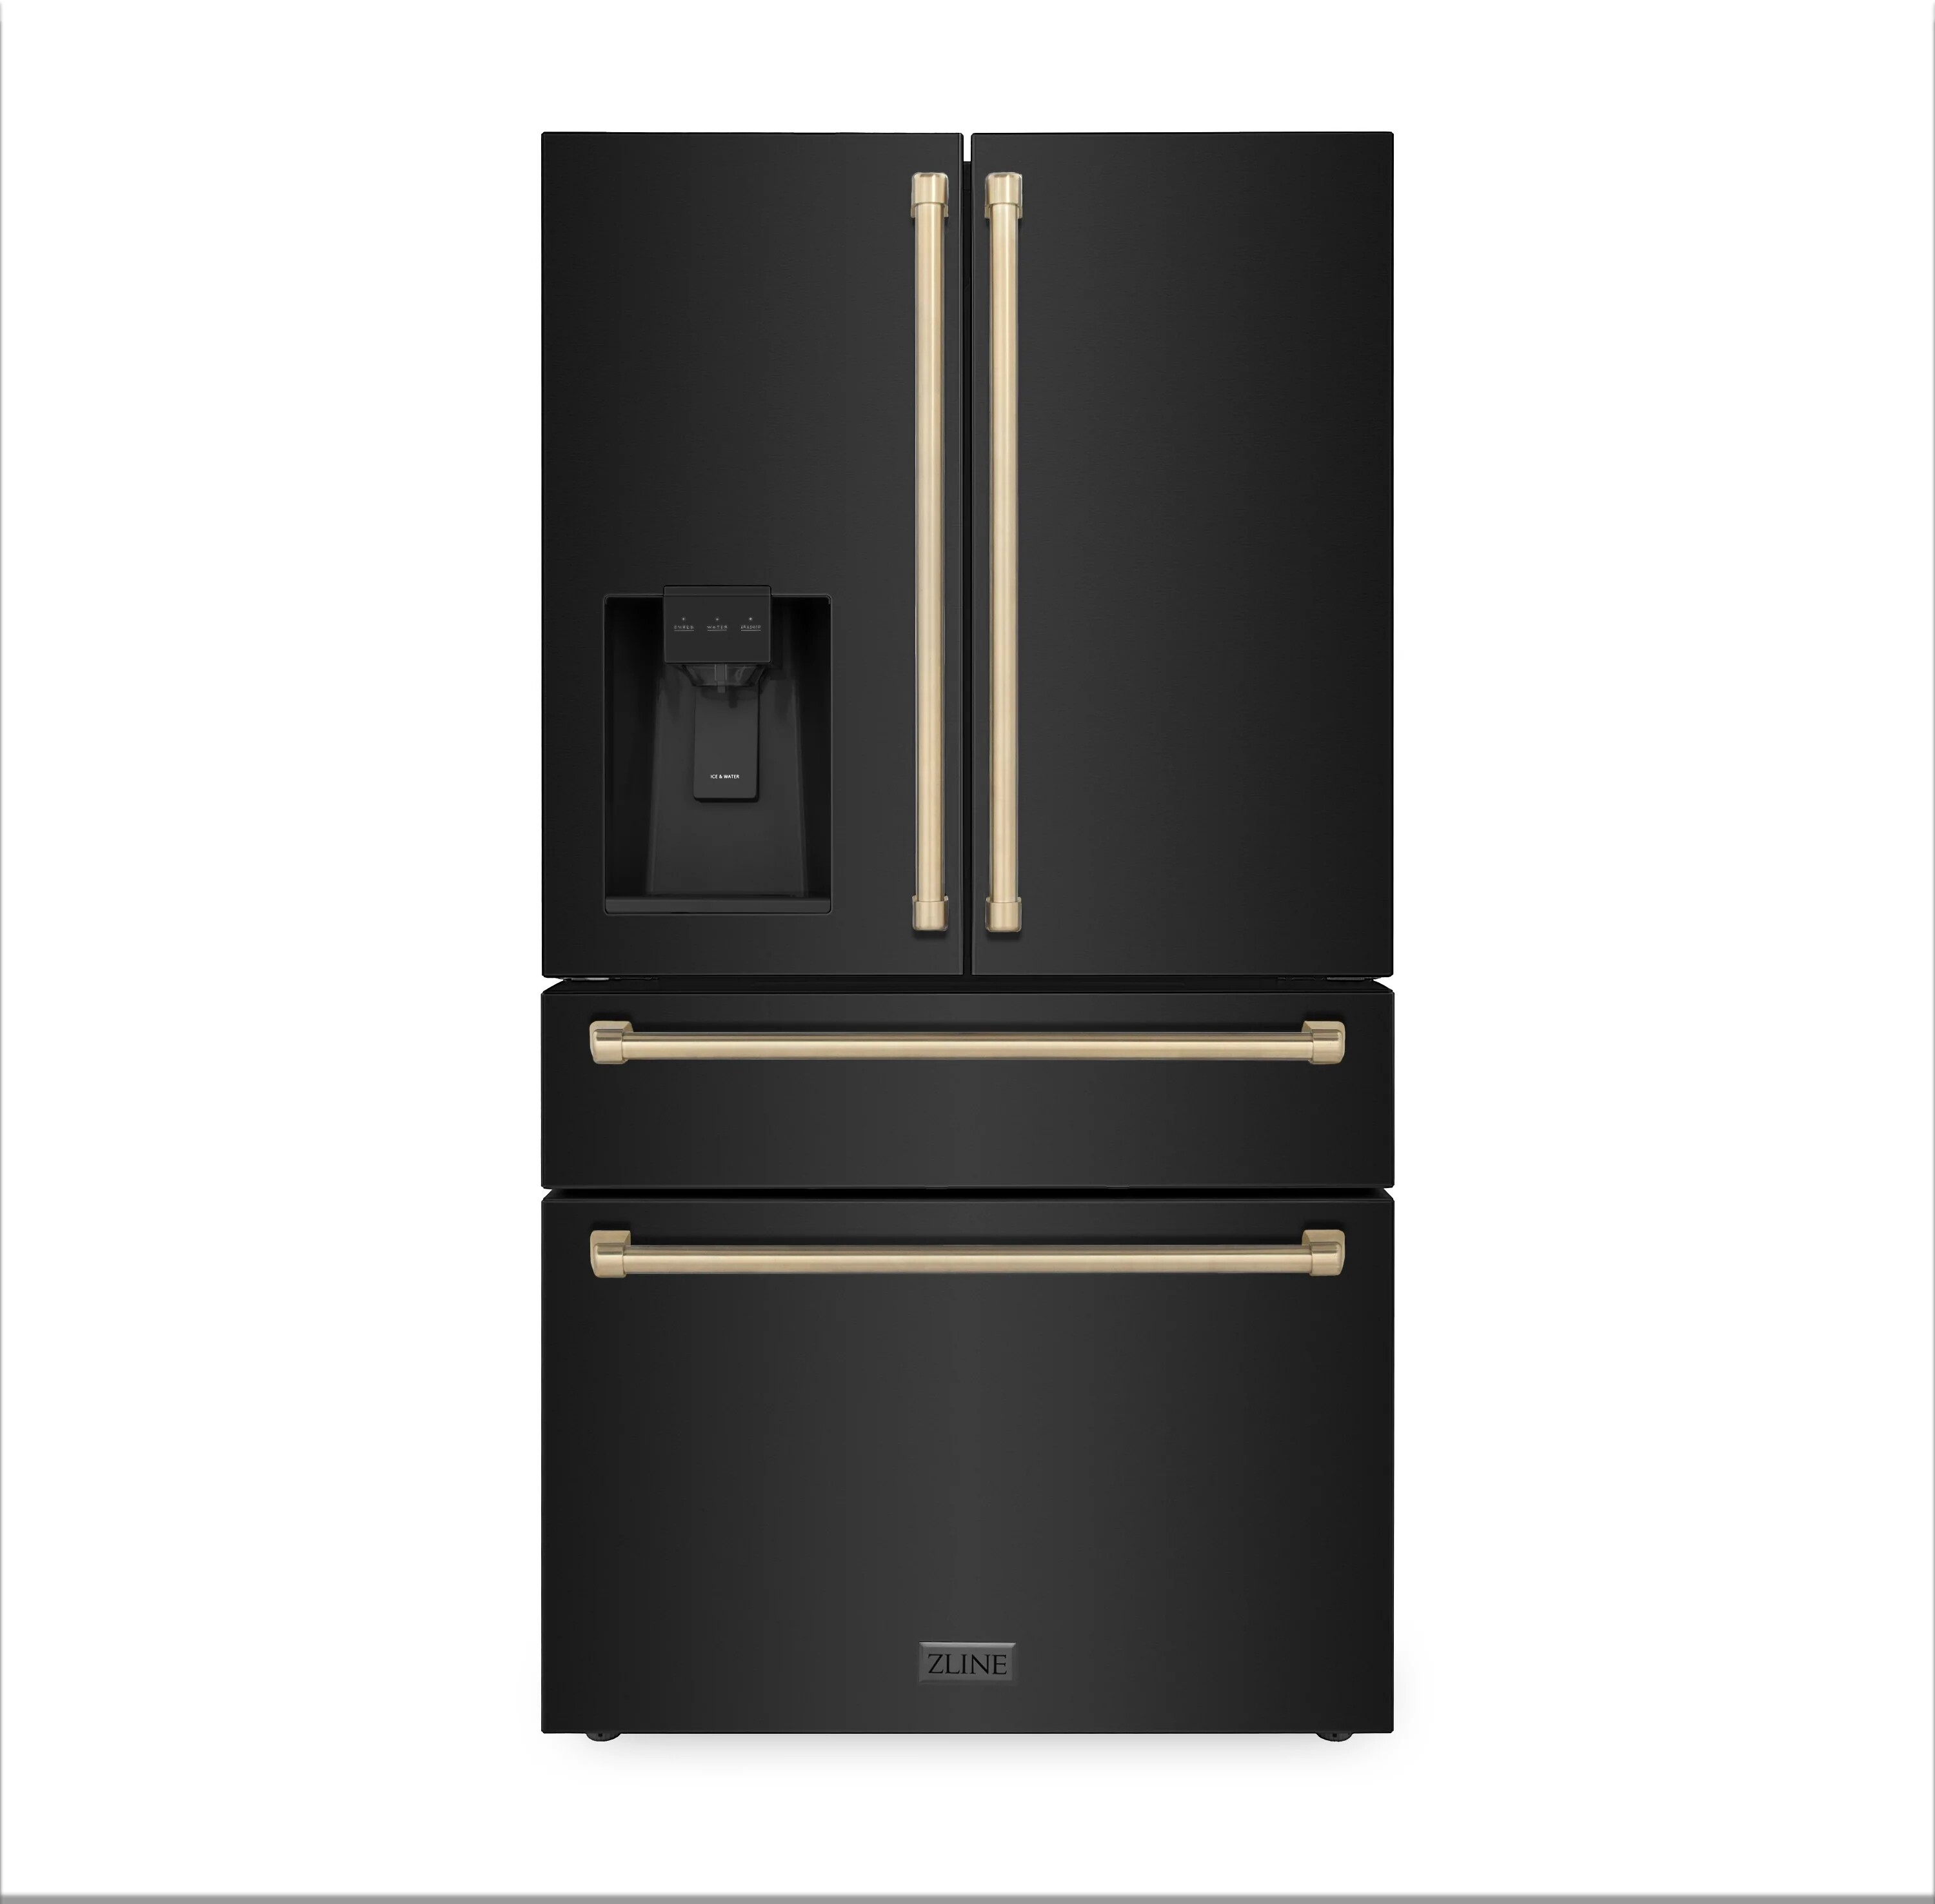 ZLINE 36 Inch 36"" Counter Depth French Door Refrigerator RFMZW36BSCB -  RFMZ-W-36-BS-CB